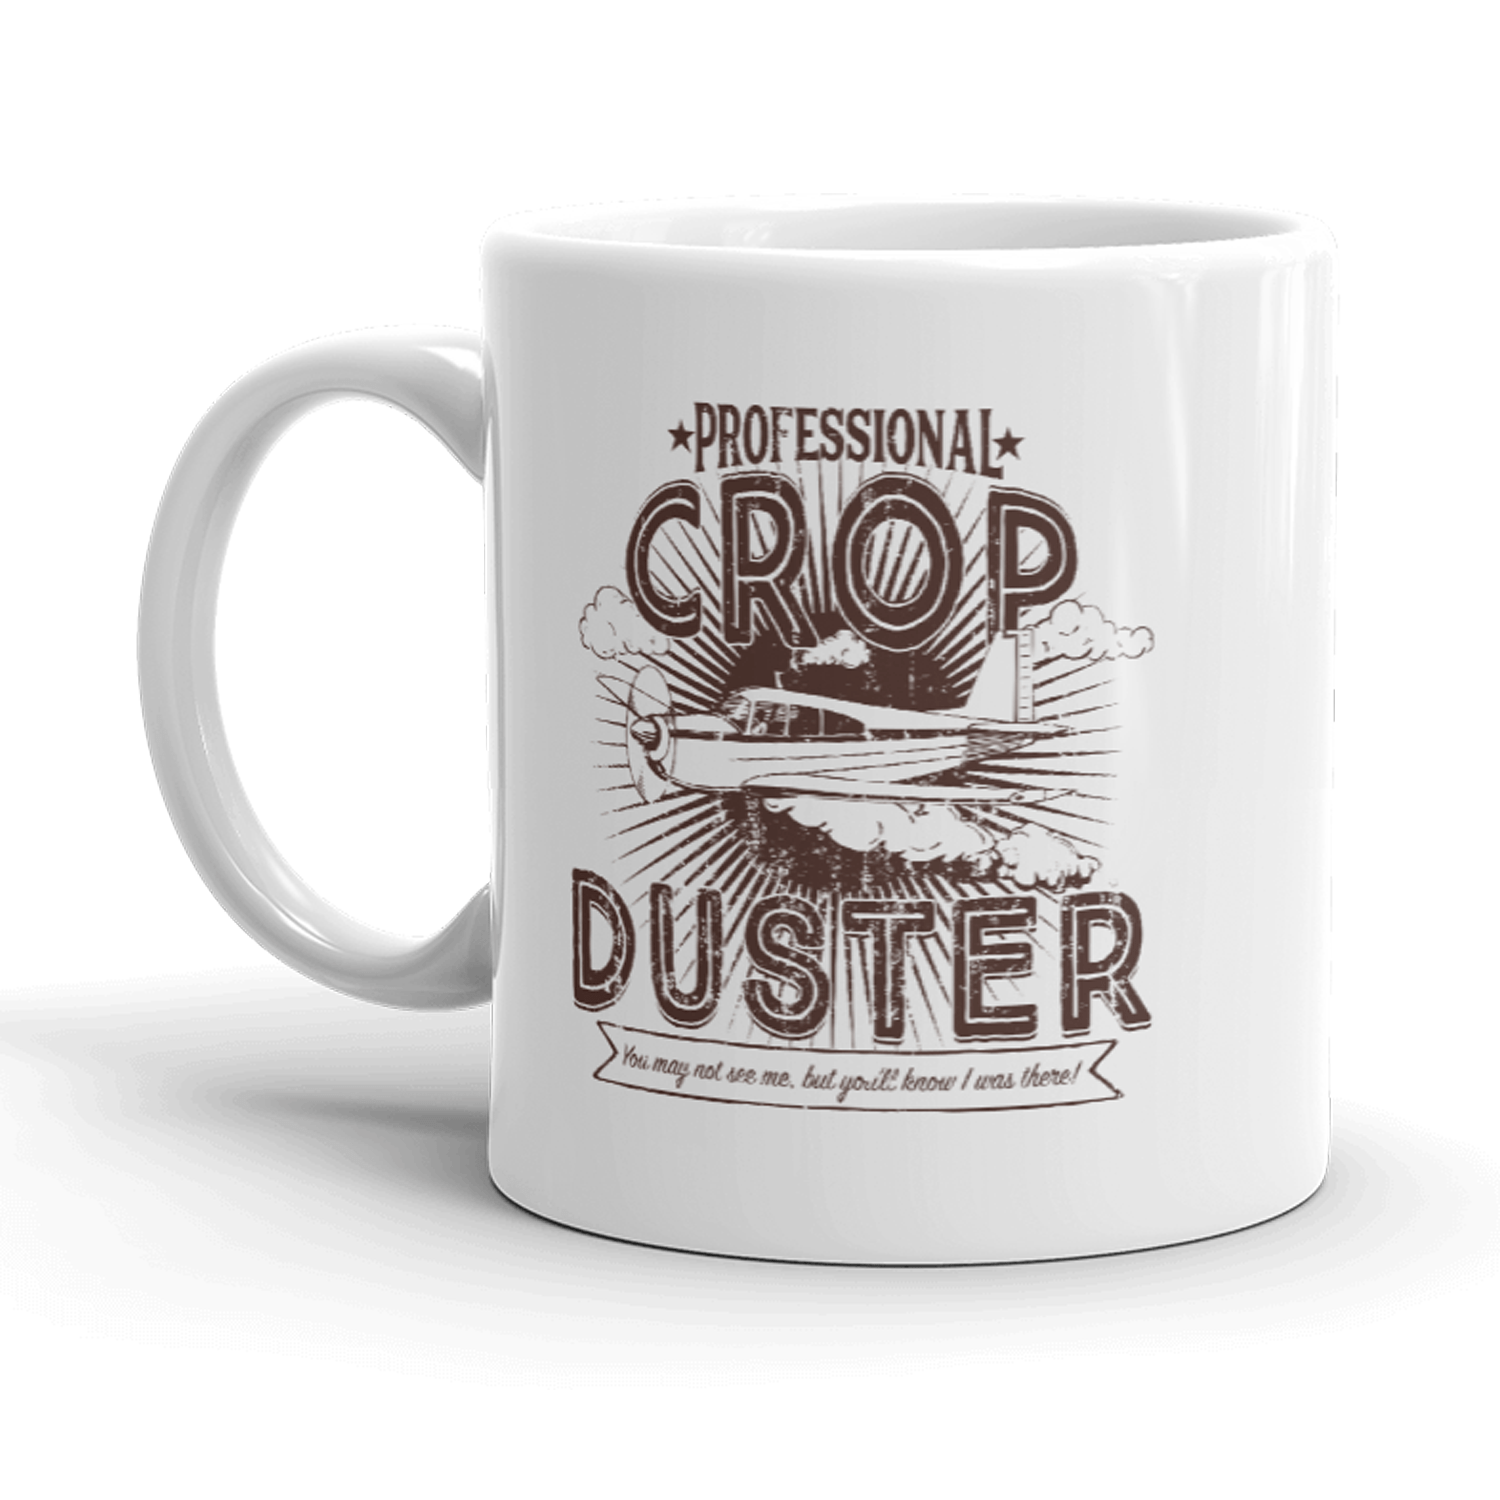 Professional Crop Duster Funny Fart Mug Rude Farting Coffee Cup-11oz - Crazy Dog T-Shirts